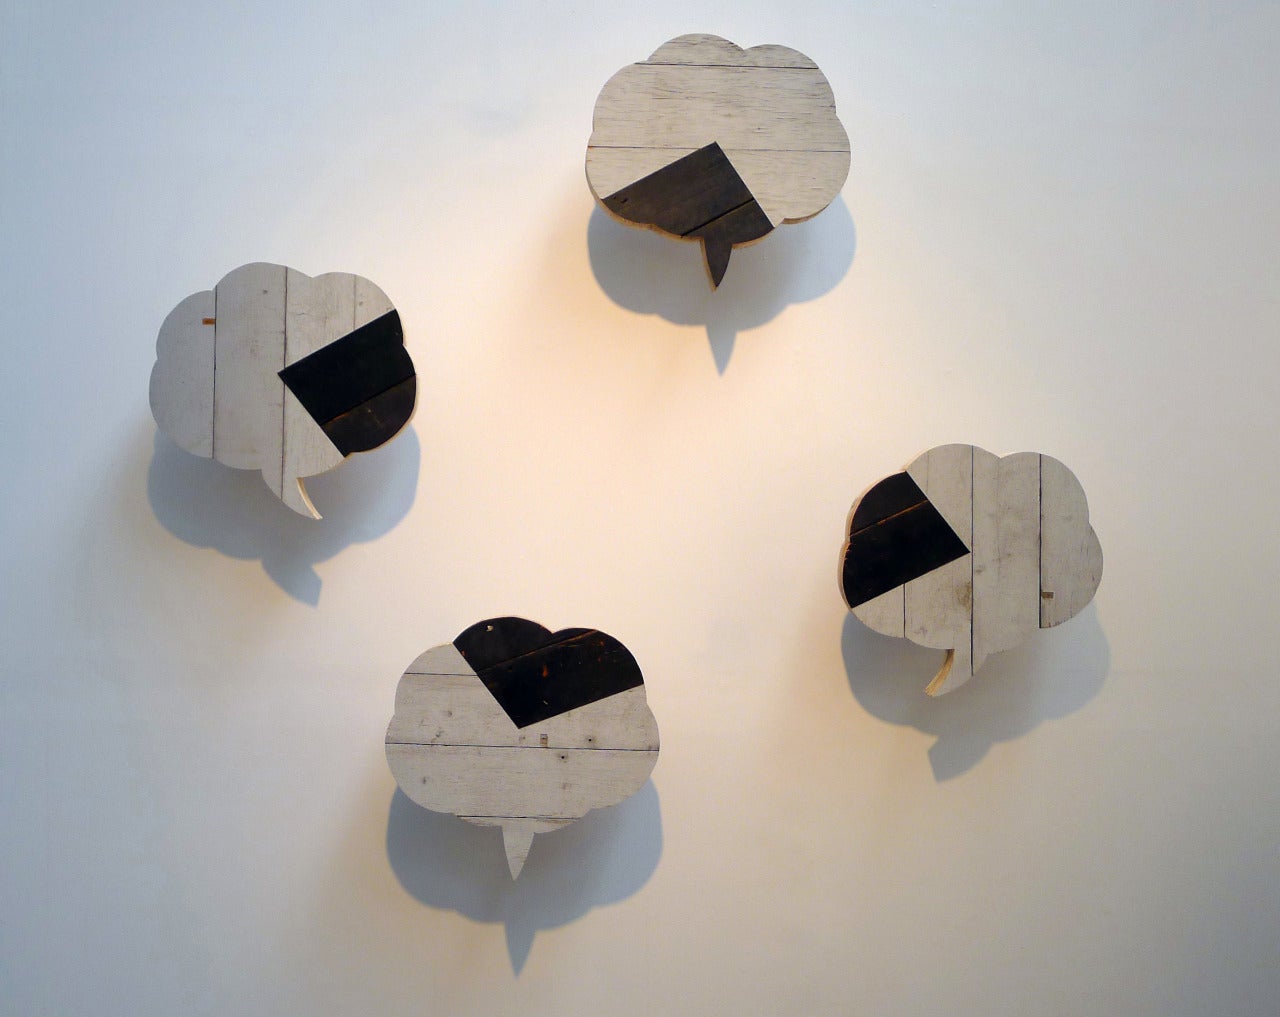 Four Corners - Sculpture by Greely Myatt